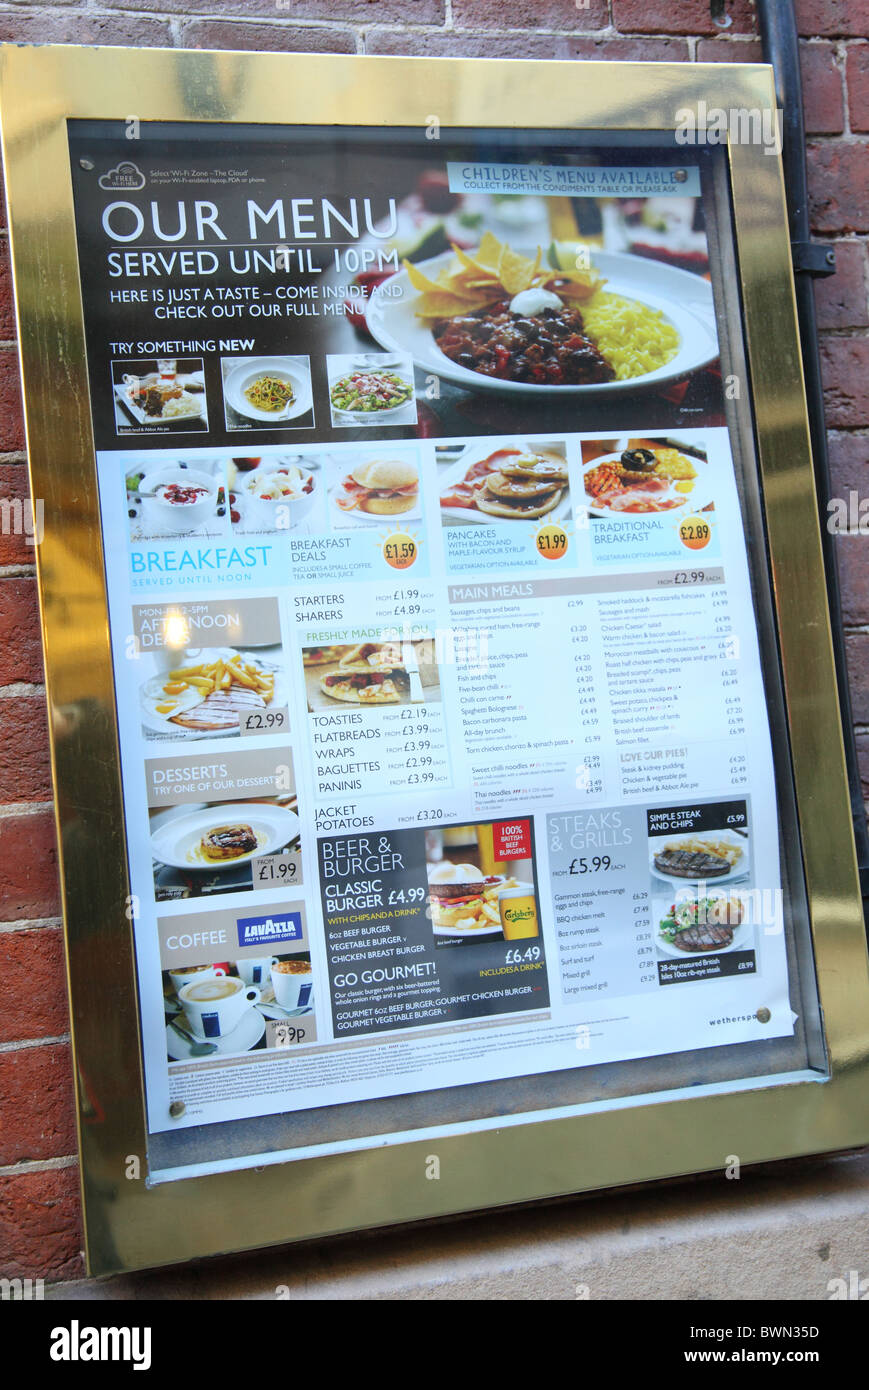 A menu outside a J. D. Wetherspoon bar in a U.K. city. Stock Photo